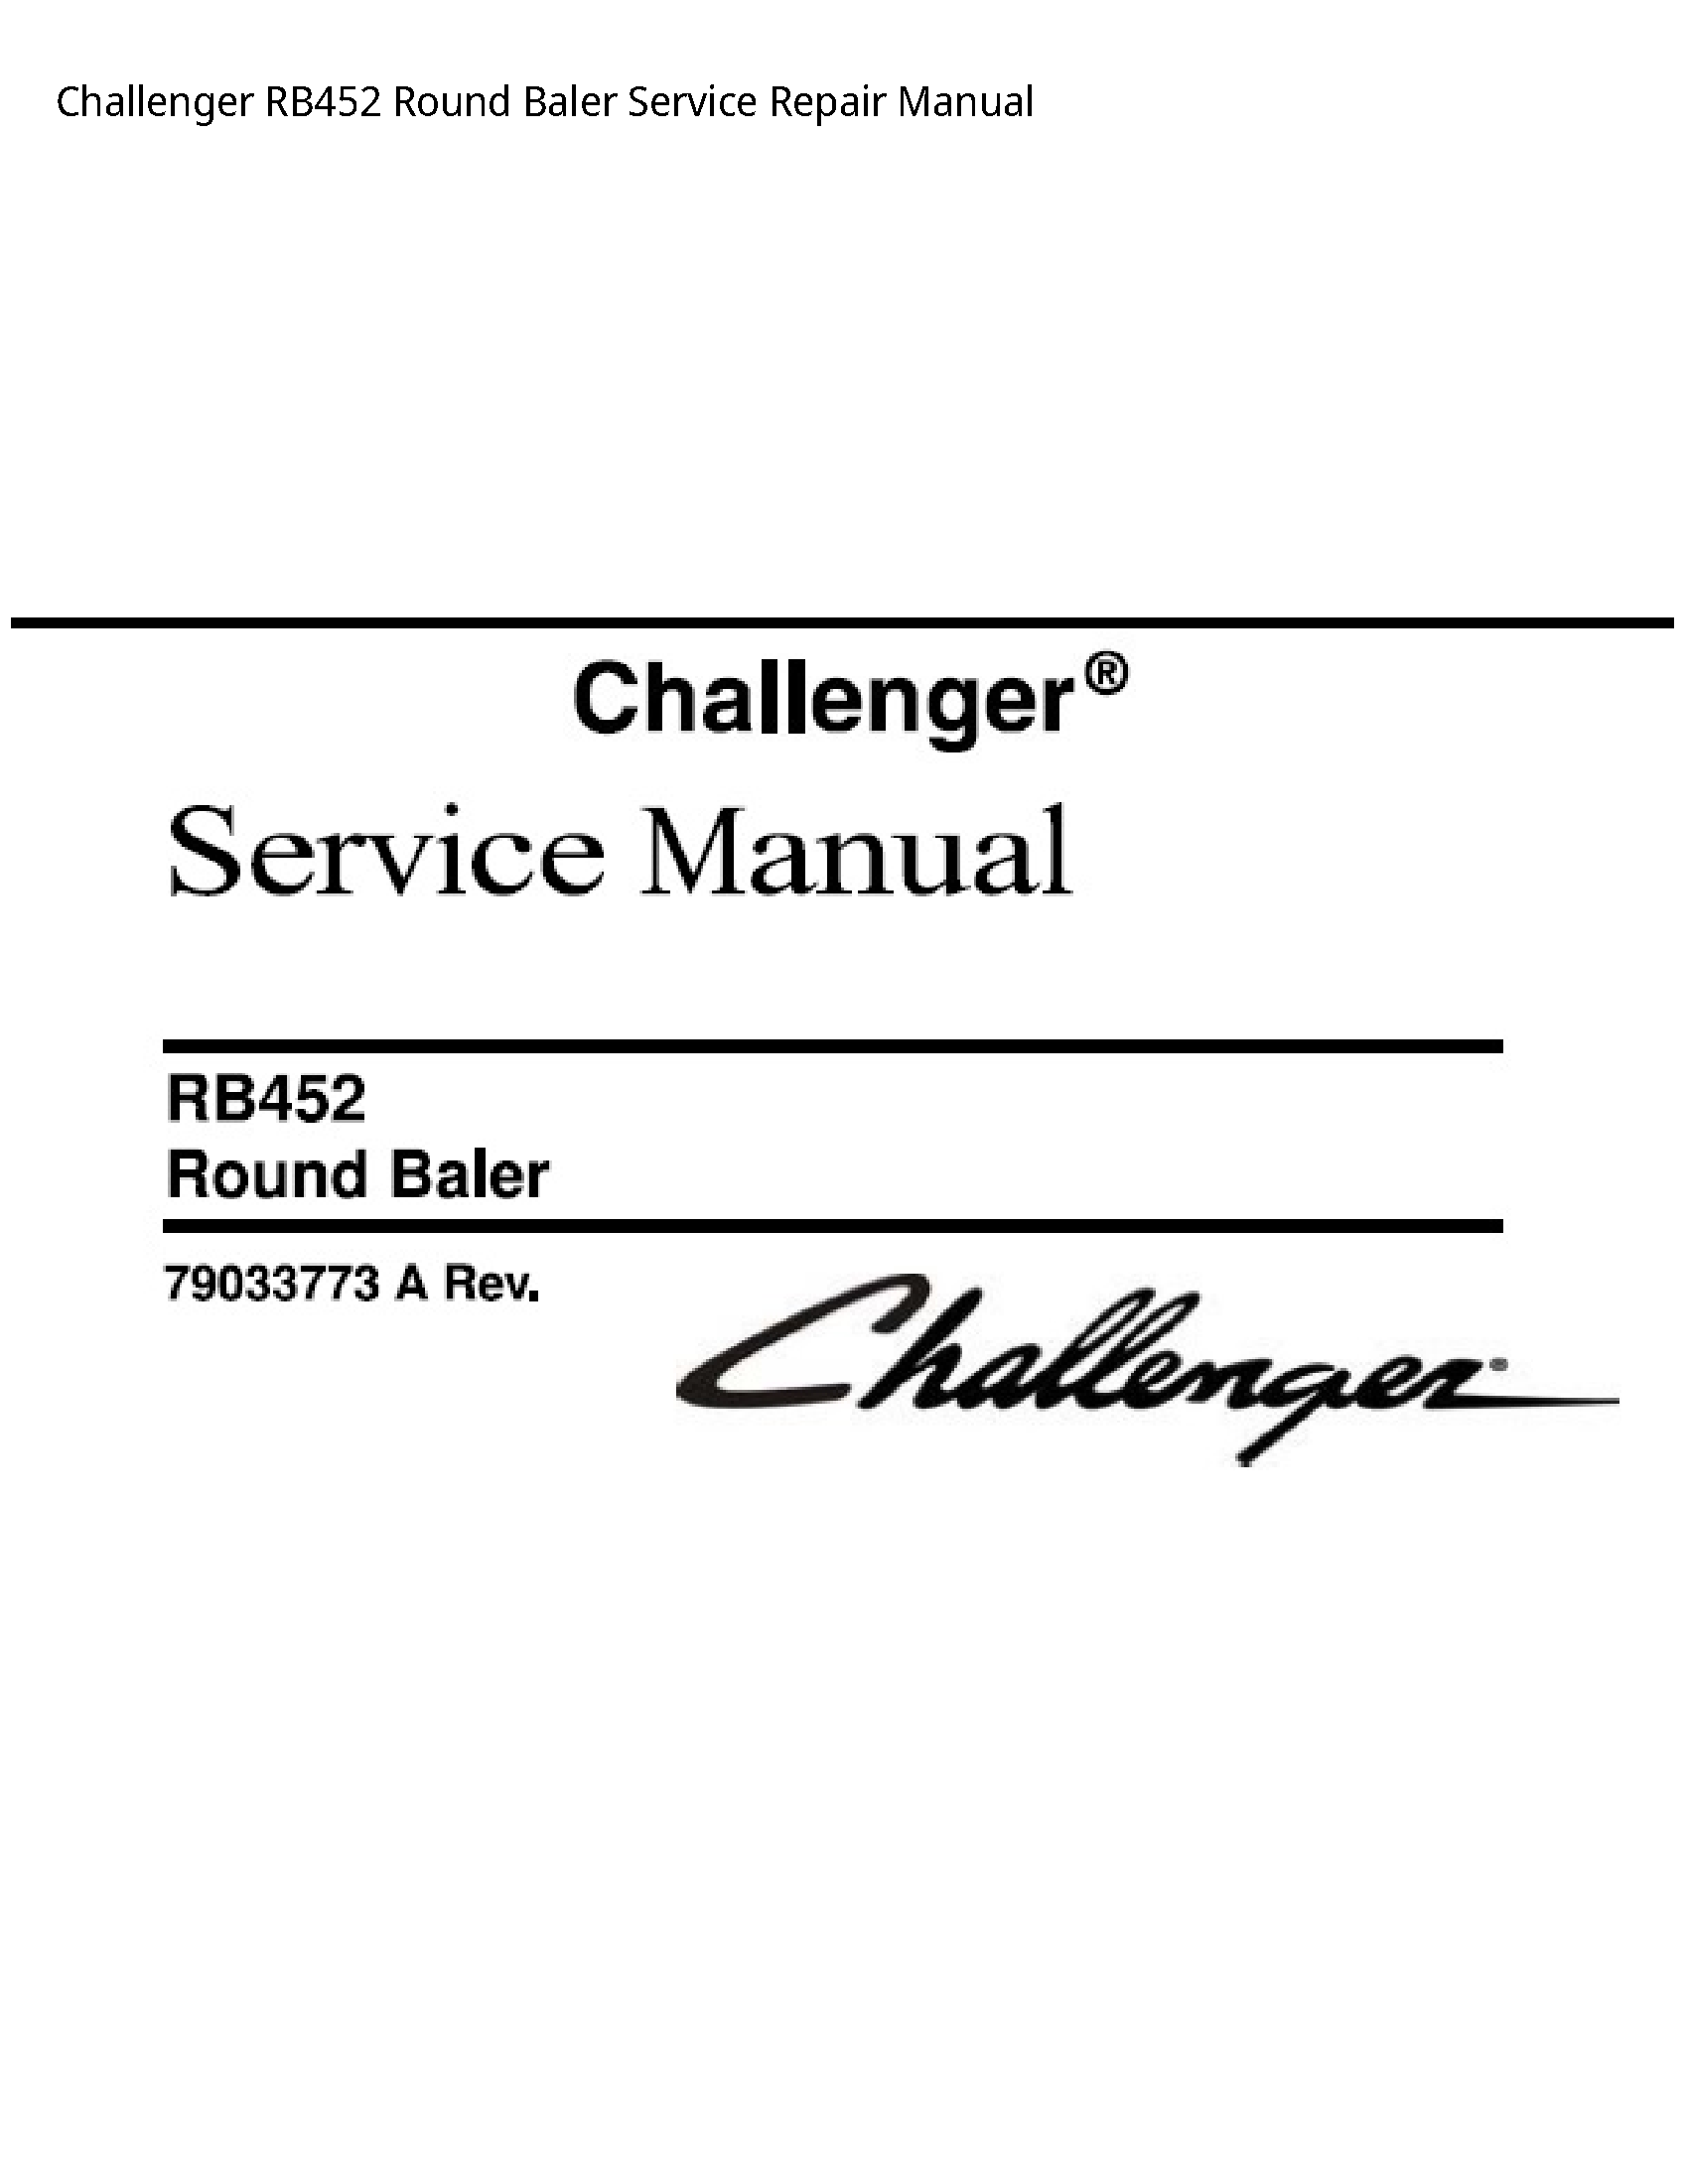 Challenger RB452 Round Baler manual